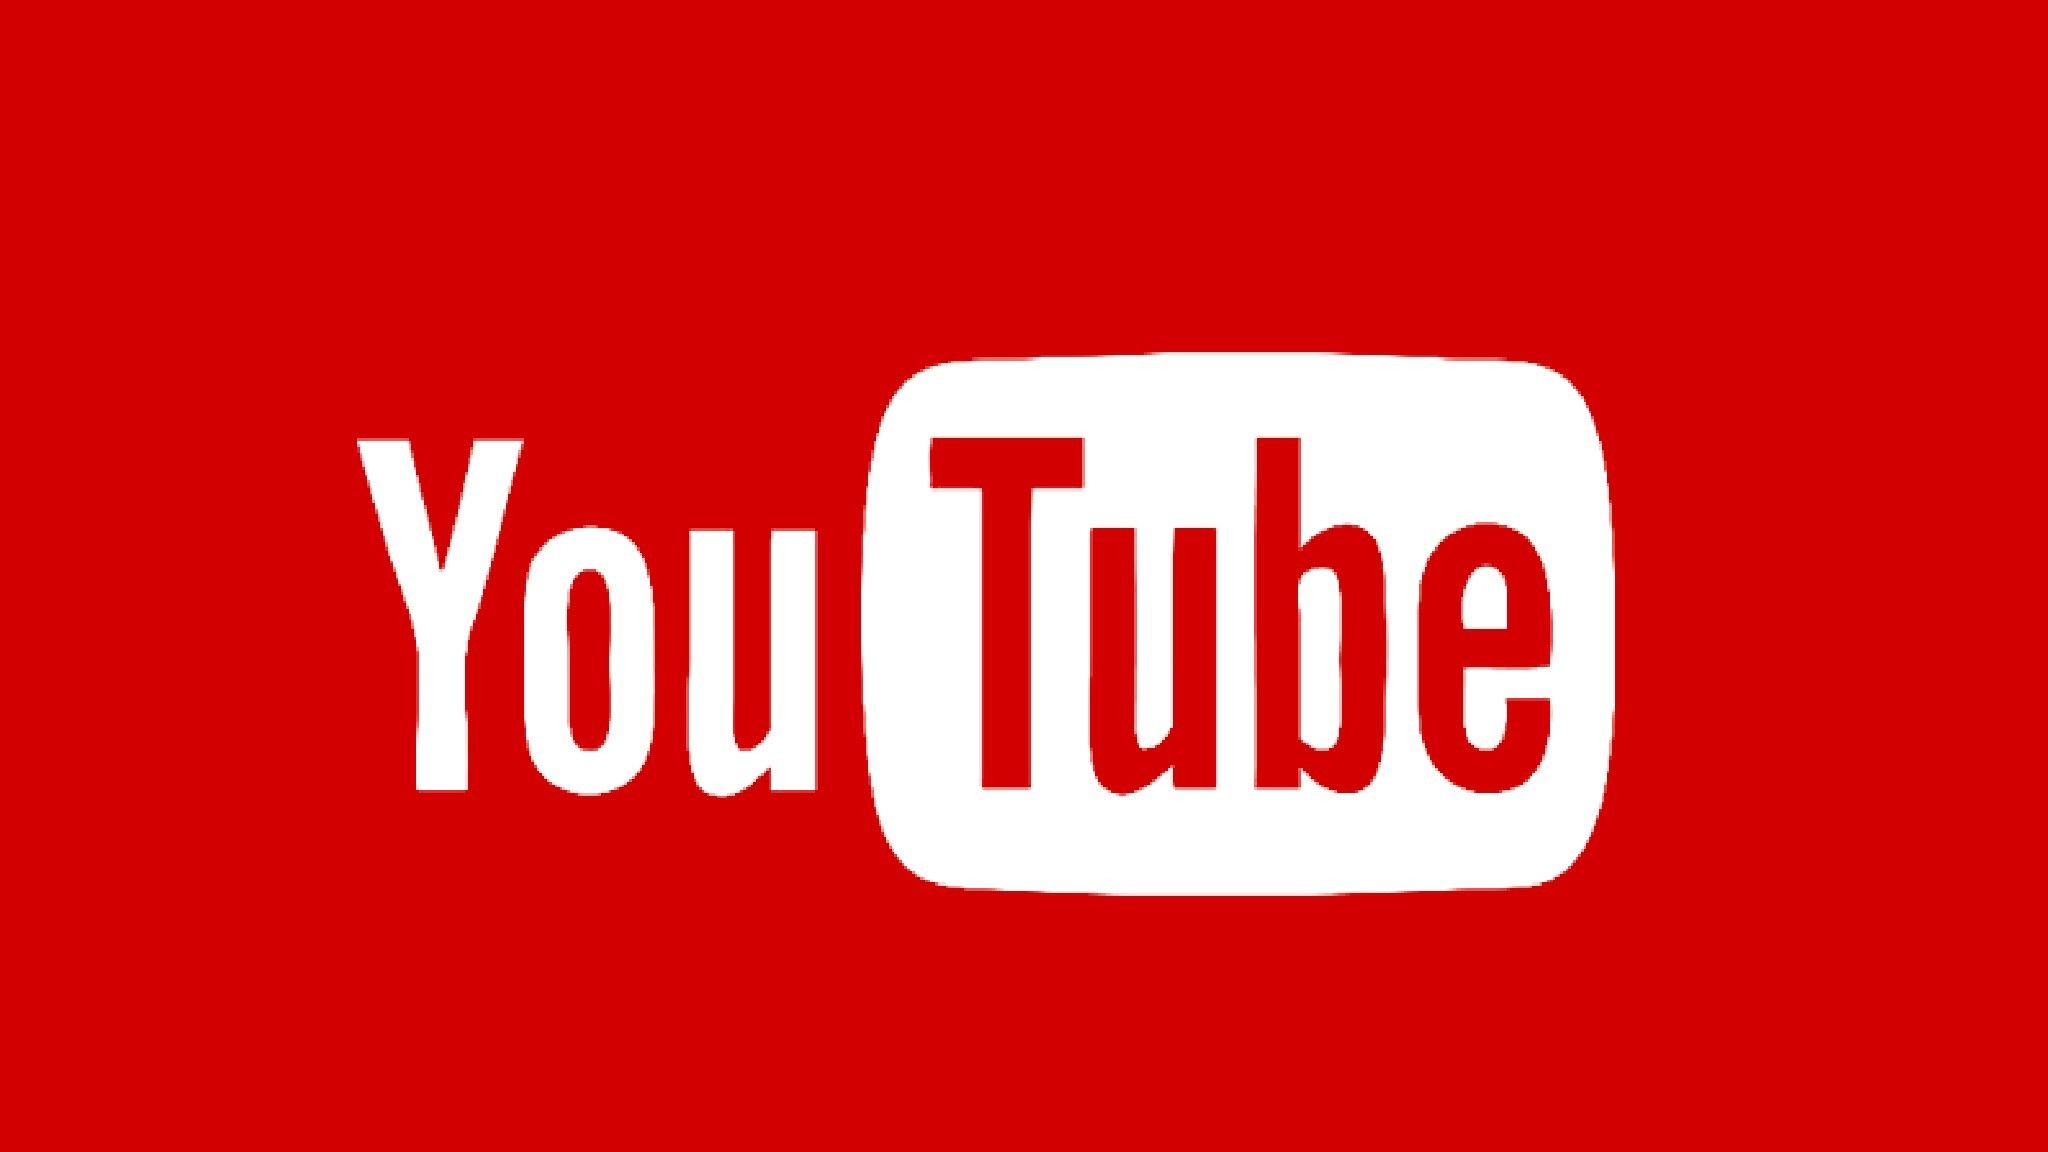 2048x1152 Youtube Youtubers Data Src Youtube Logo Banner 2048x1152 Download Hd Wallpaper Wallpapertip